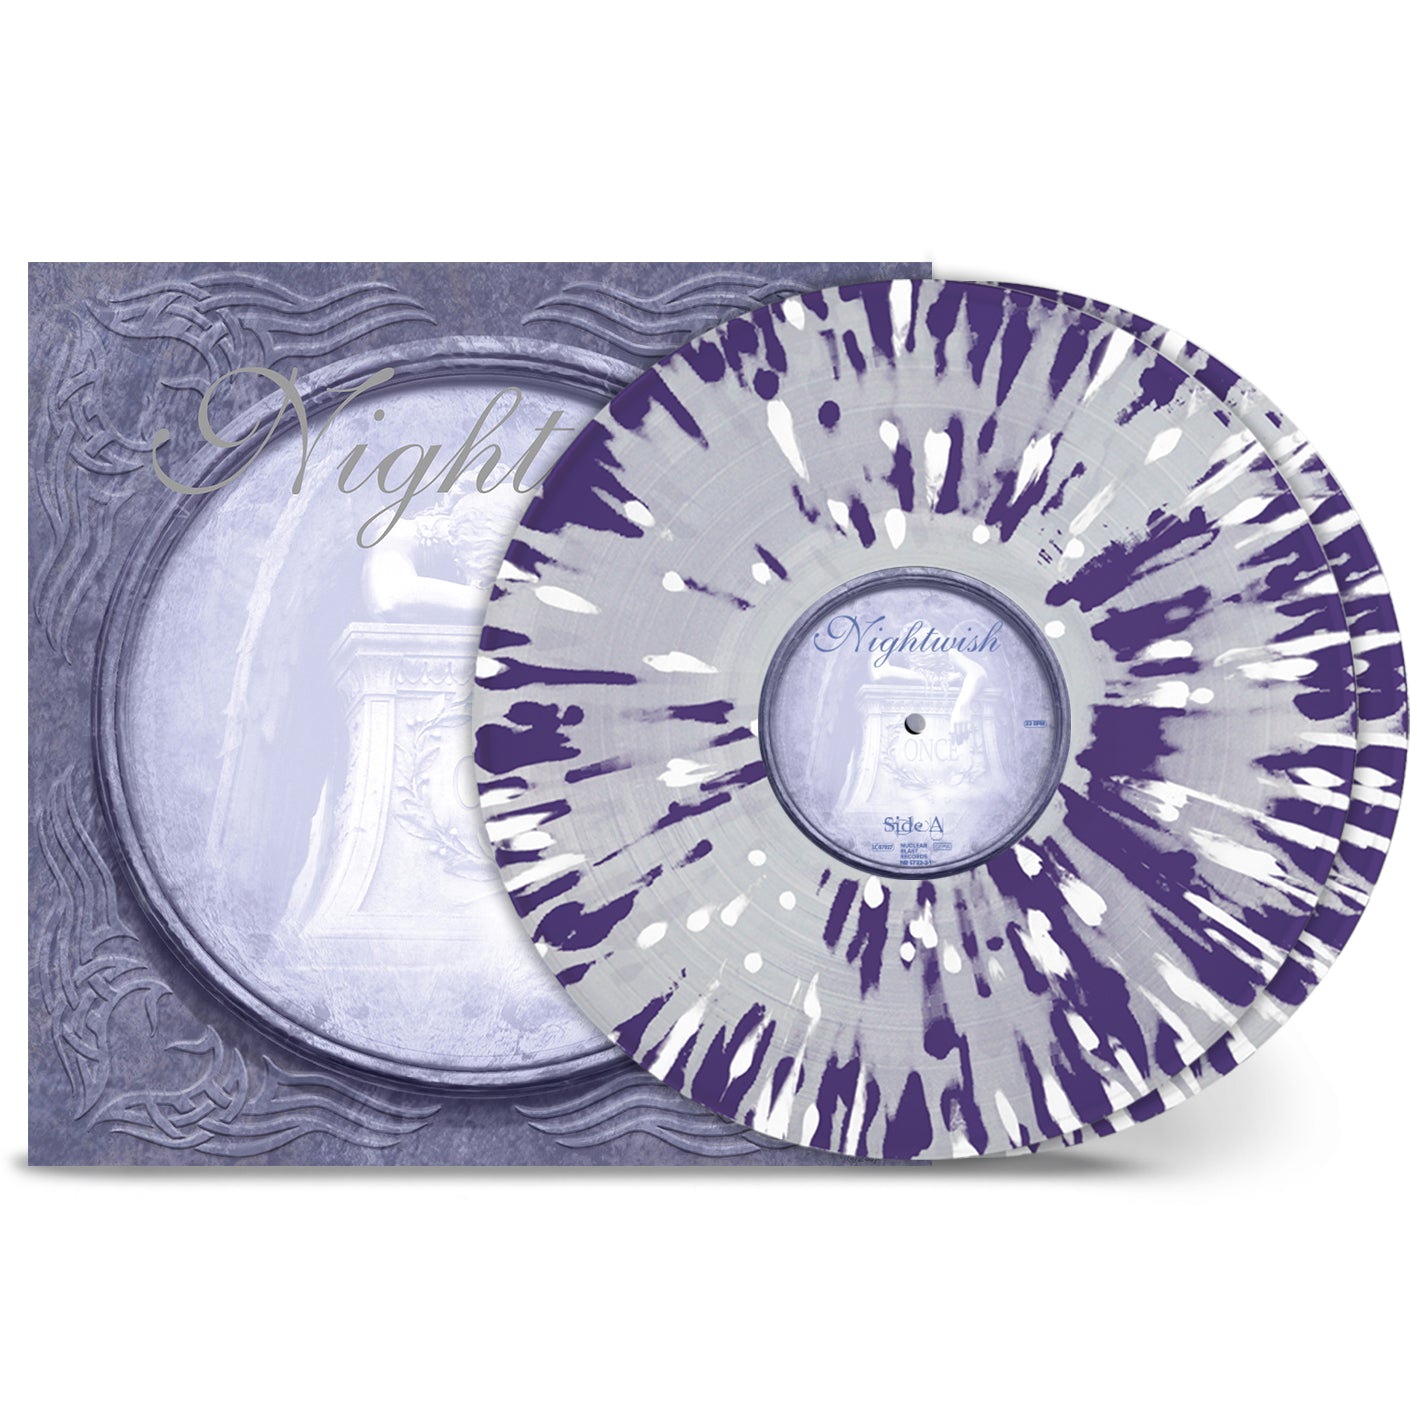 Nightwish "Once" 2x12" Clear White Purple Splatter Vinyl - PRE-ORDER